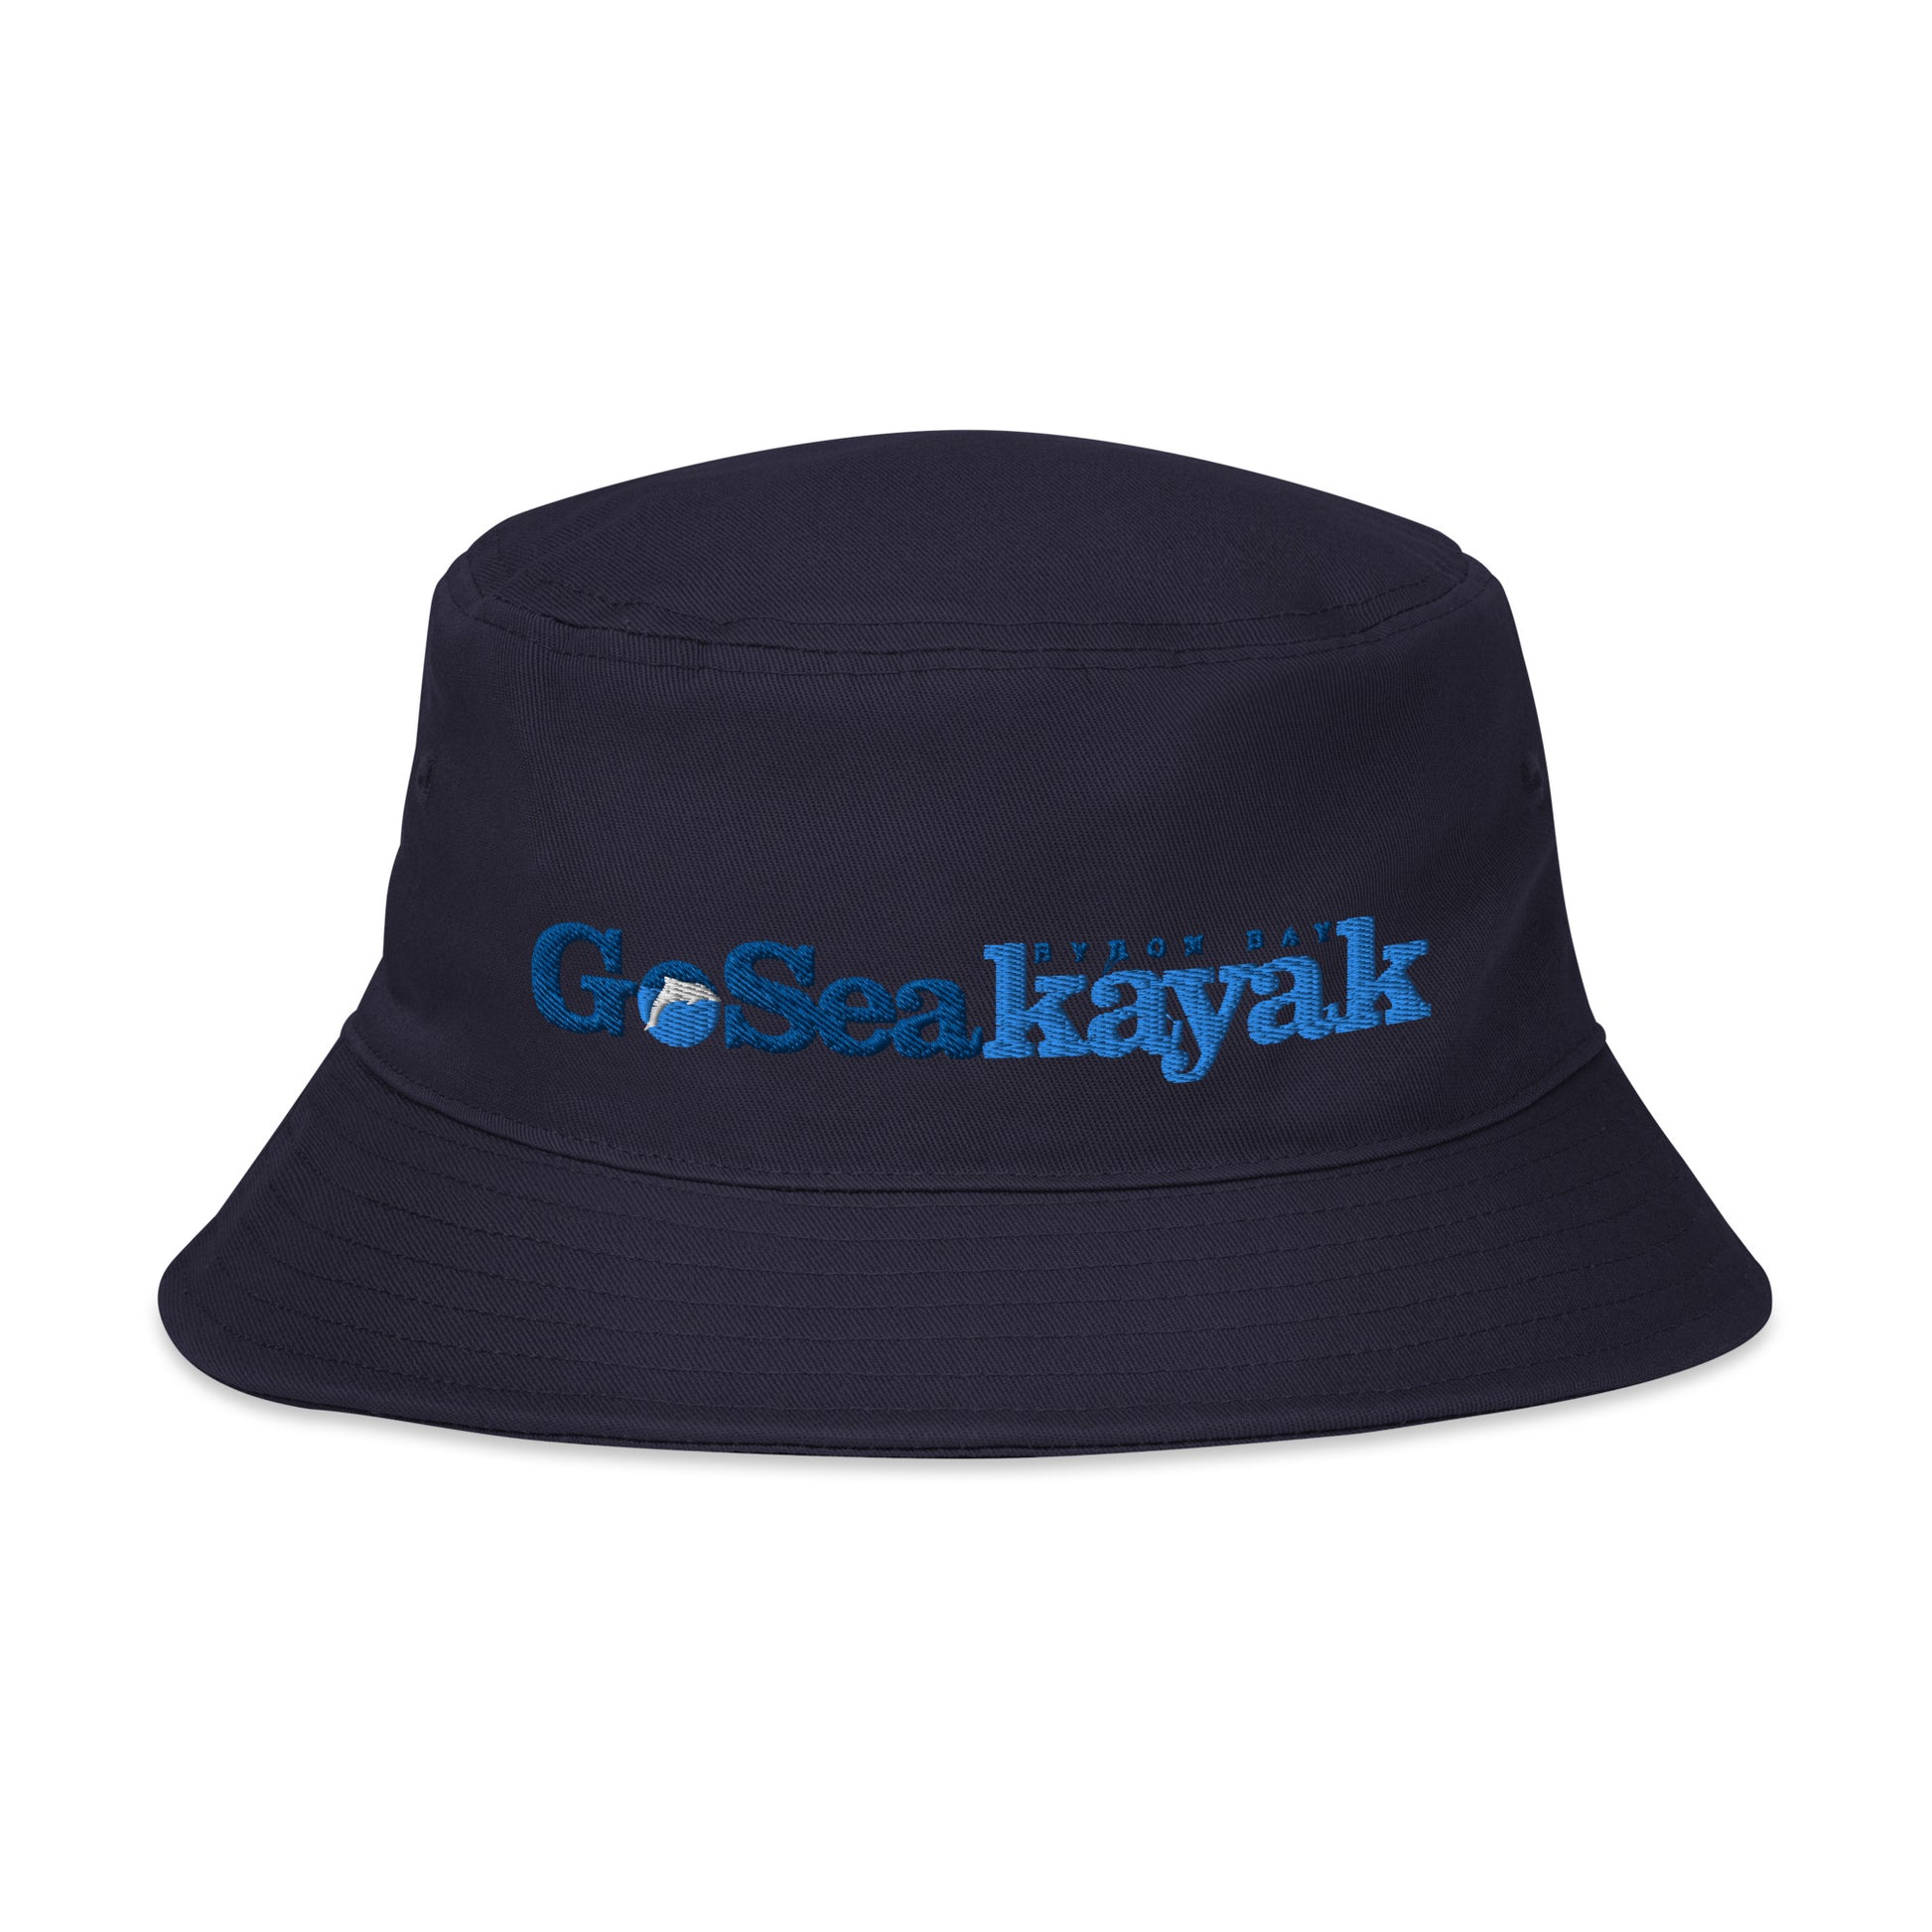  Unisex Bucket Hat - Navy - Front view - Go Sea Kayak Byron Bay logo on front  - Genuine Byron Bay Merchandise | Produced by Go Sea Kayak Byron Bay